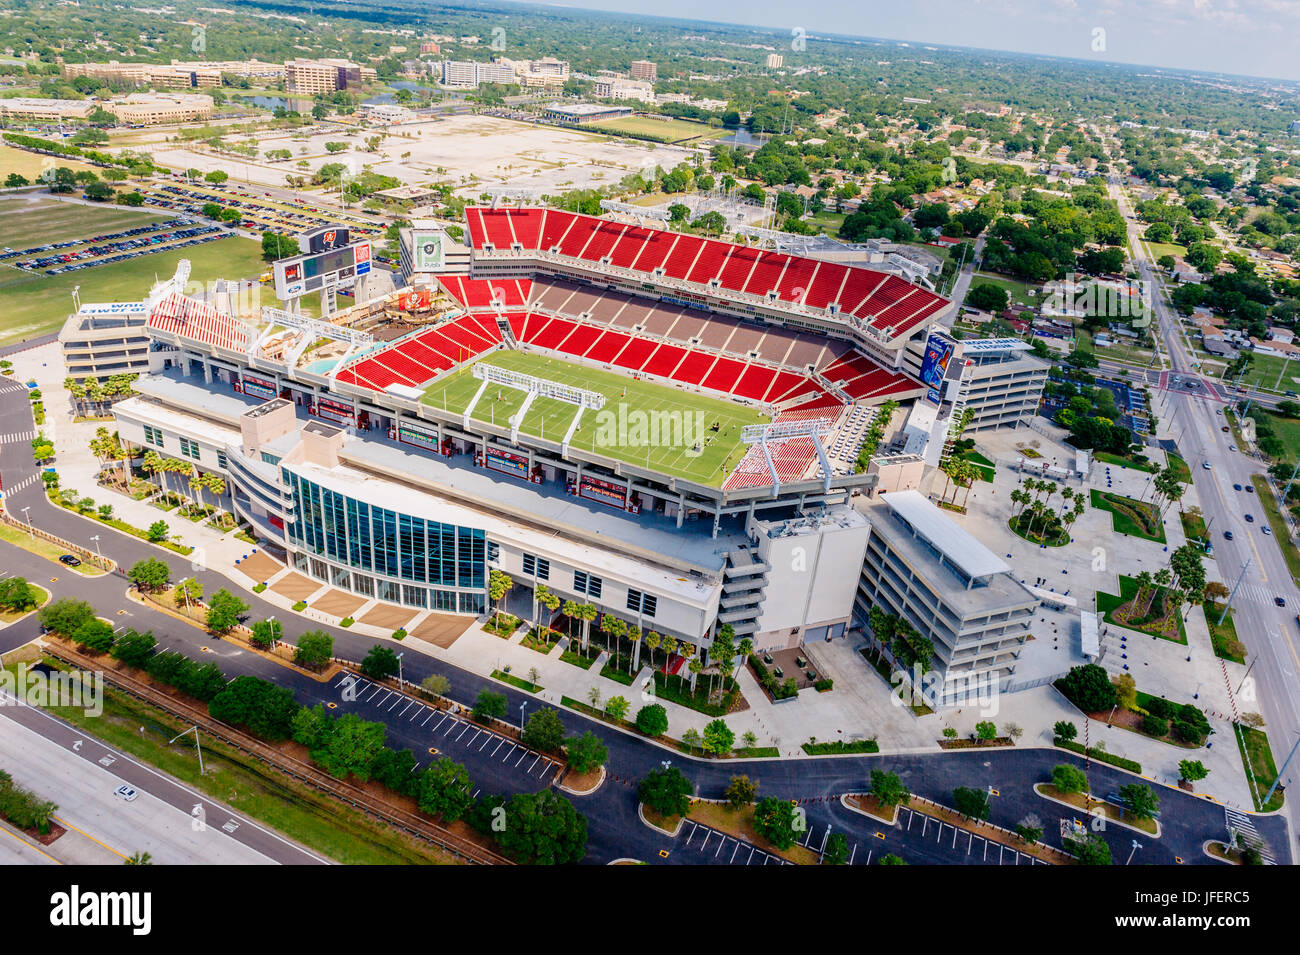 Vue aérienne de Raymond James Stadium de Tampa, Floride, USA, un grand stade de football américain. Banque D'Images